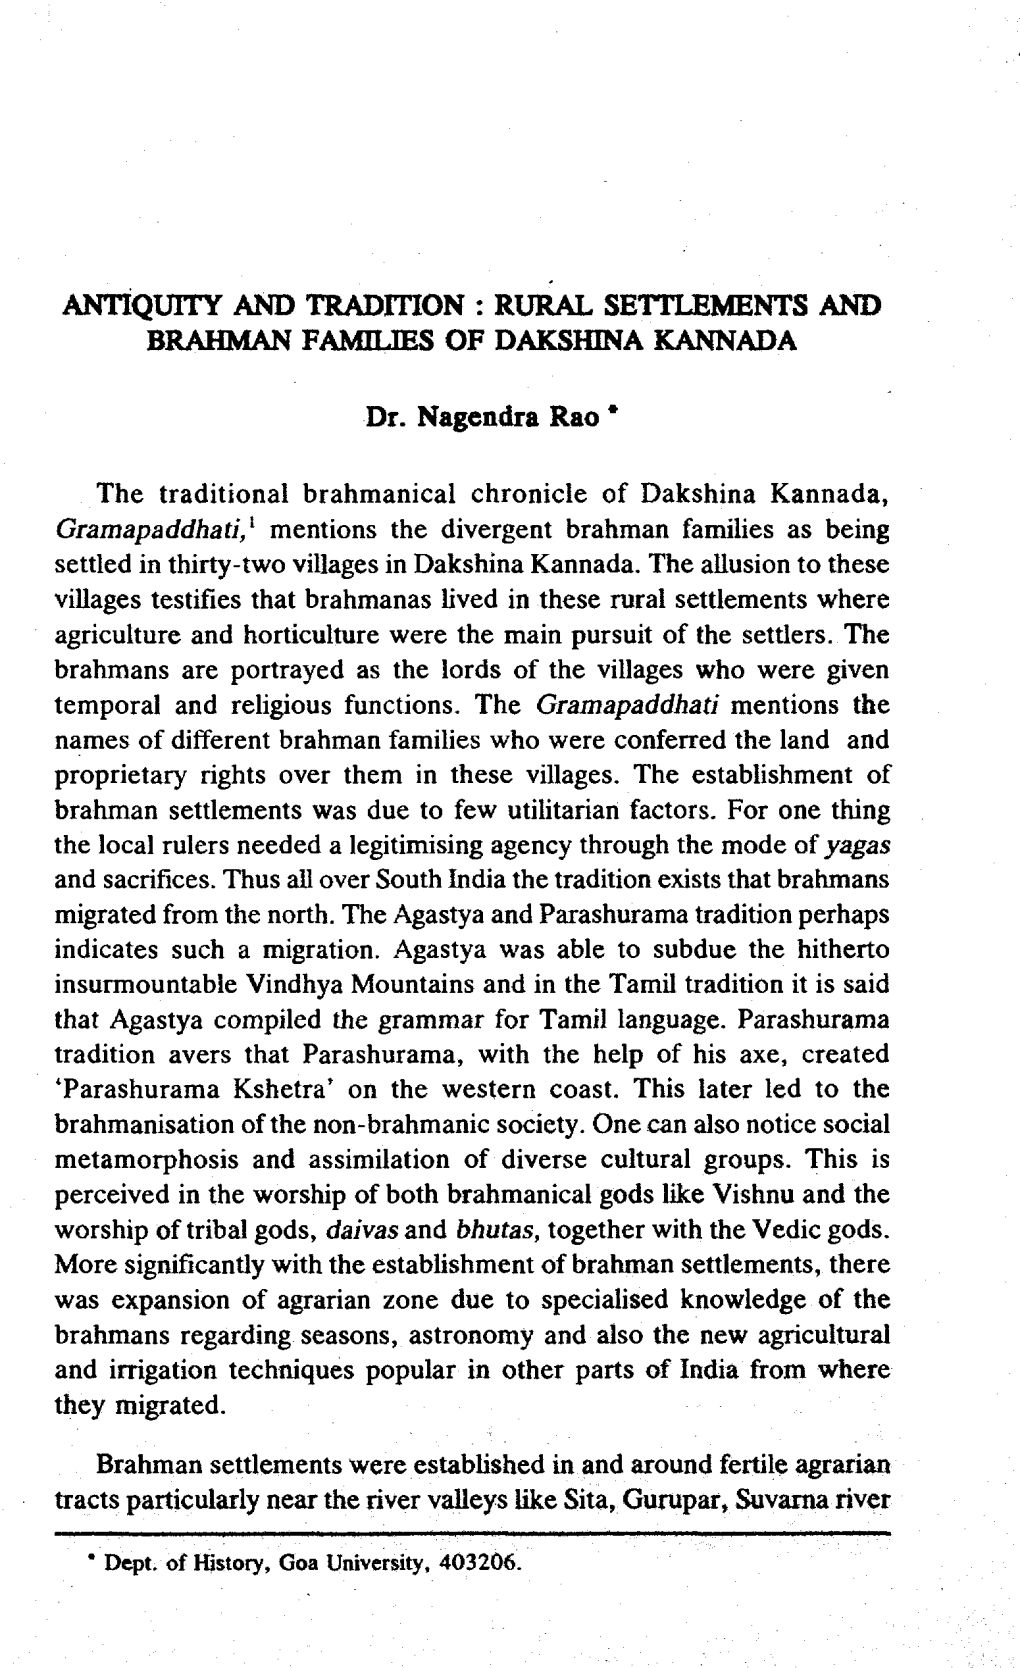 RURAL SETTLEMENTS and BRAHMAN FAMILIES of DAKSHINA KANNADA Dr. Nagendra Rao * the Traditional Brahmani